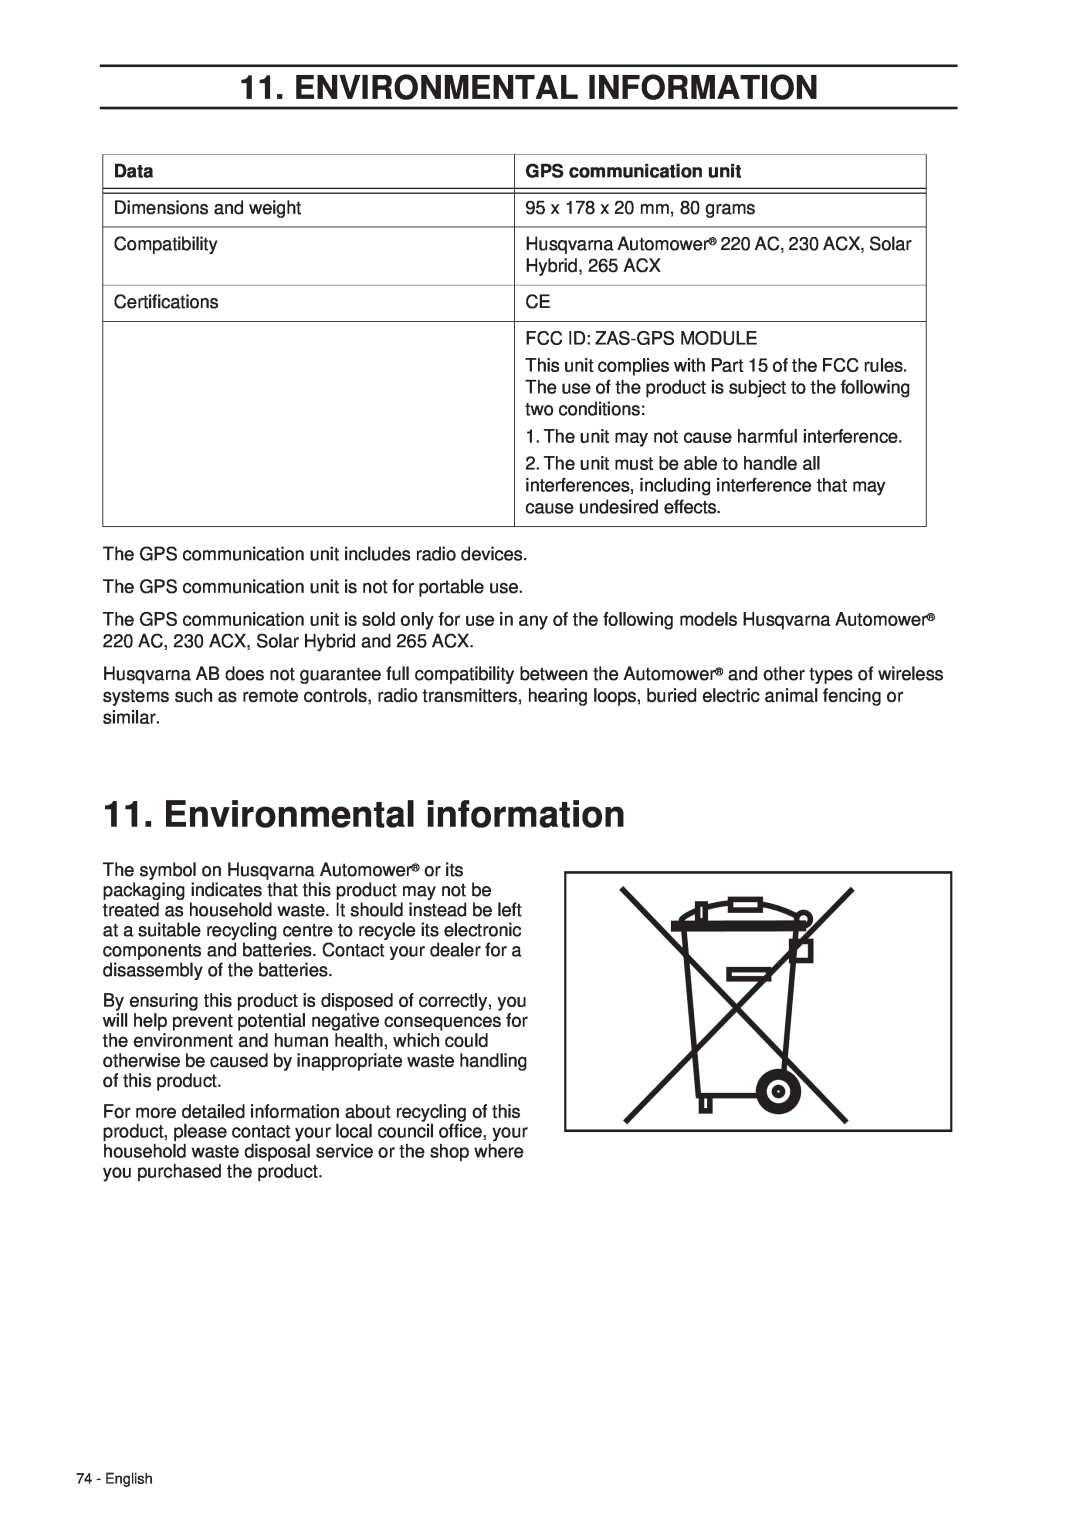 Husqvarna 265 ACX manual Environmental information, Environmental Information, Data, GPS communication unit 